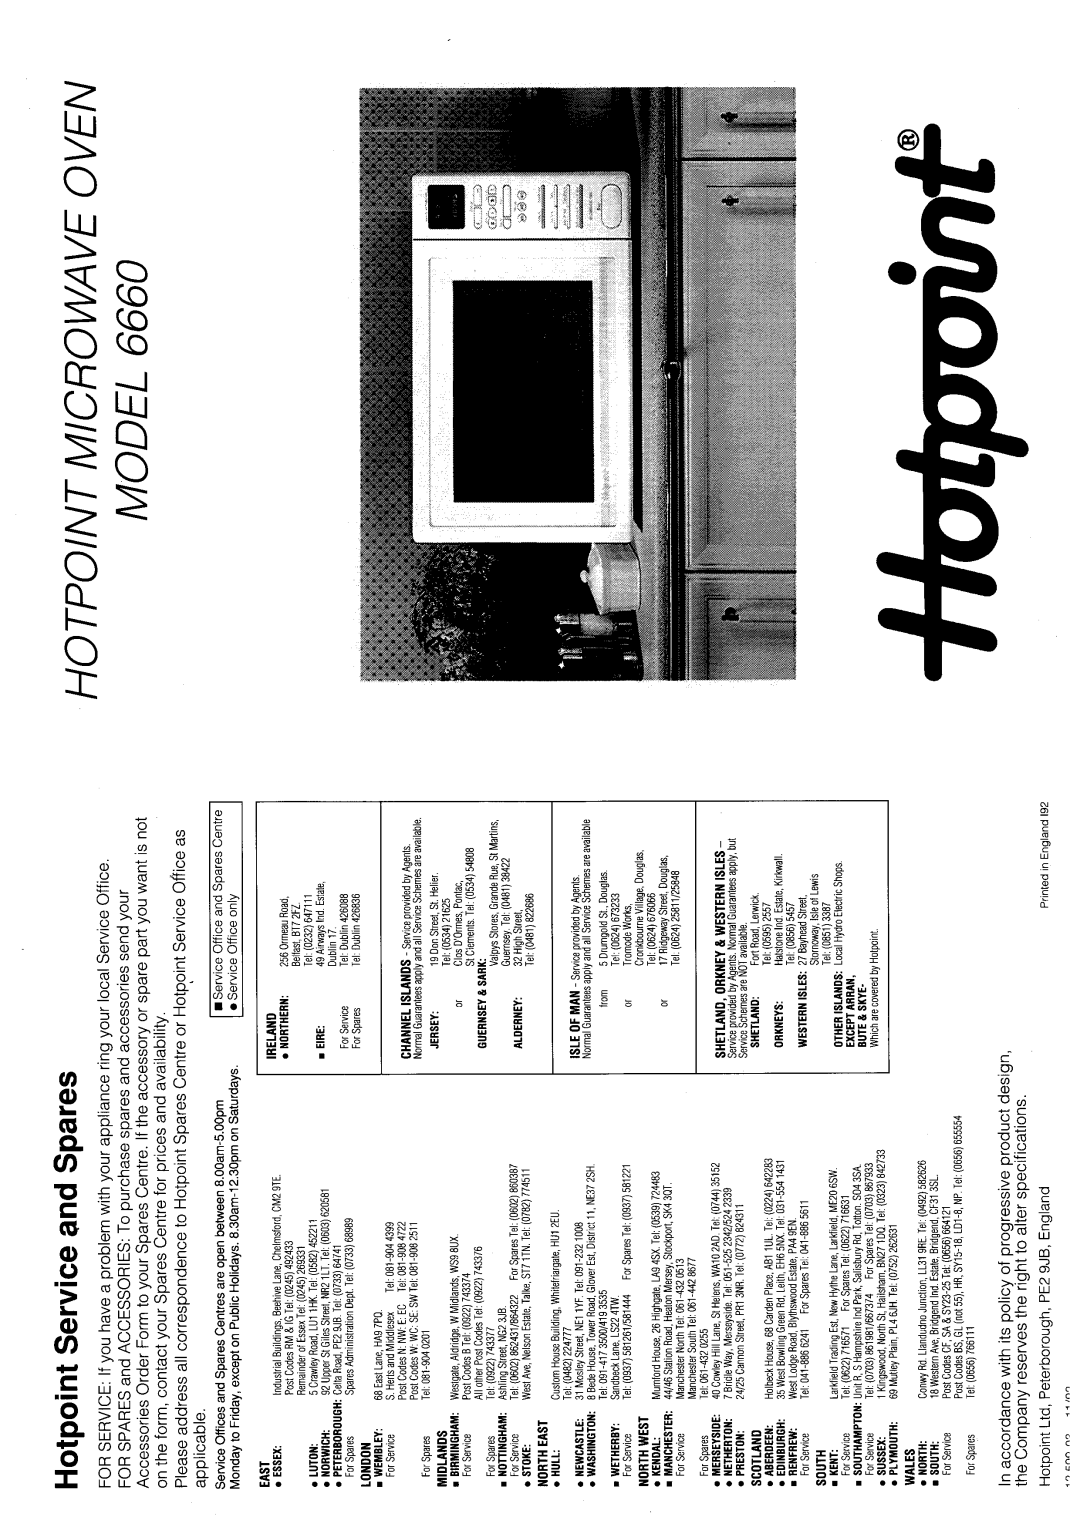 Hotpoint 6660 manual 